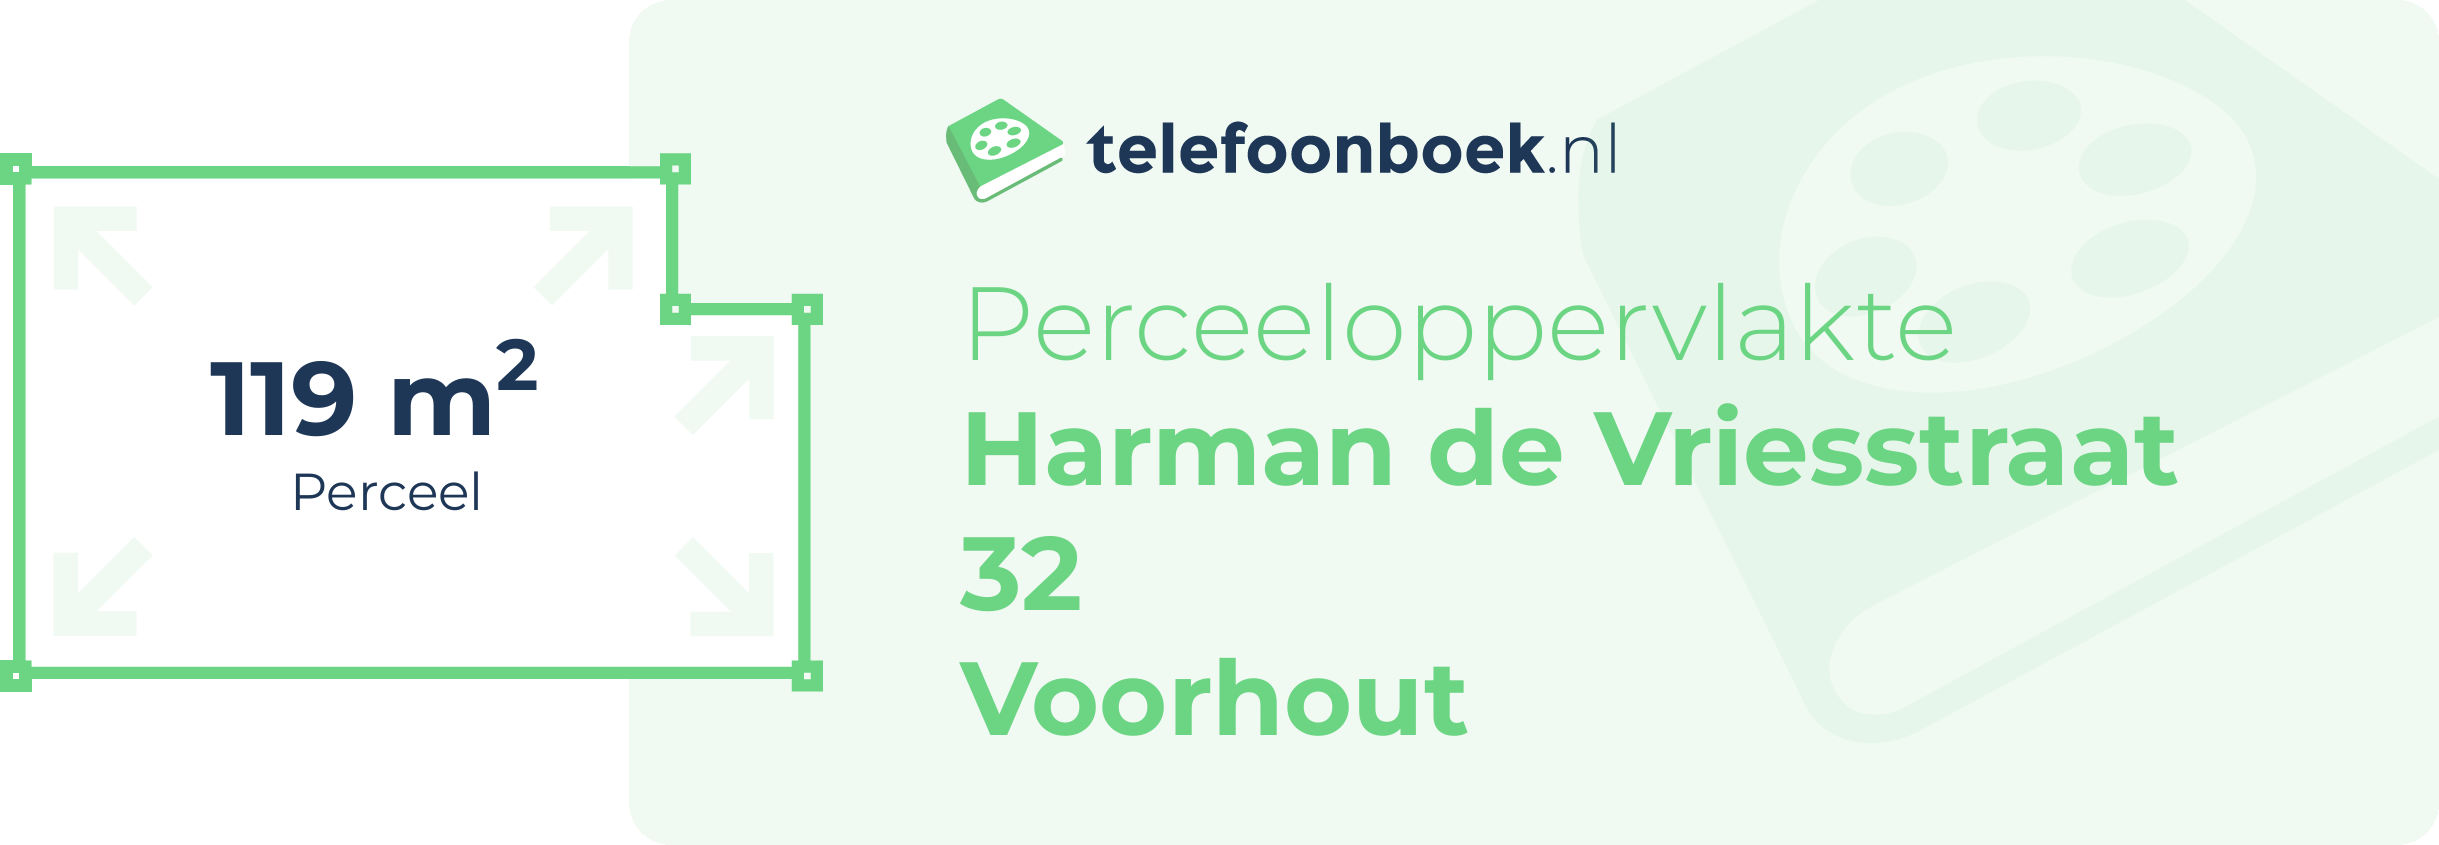 Perceeloppervlakte Harman De Vriesstraat 32 Voorhout